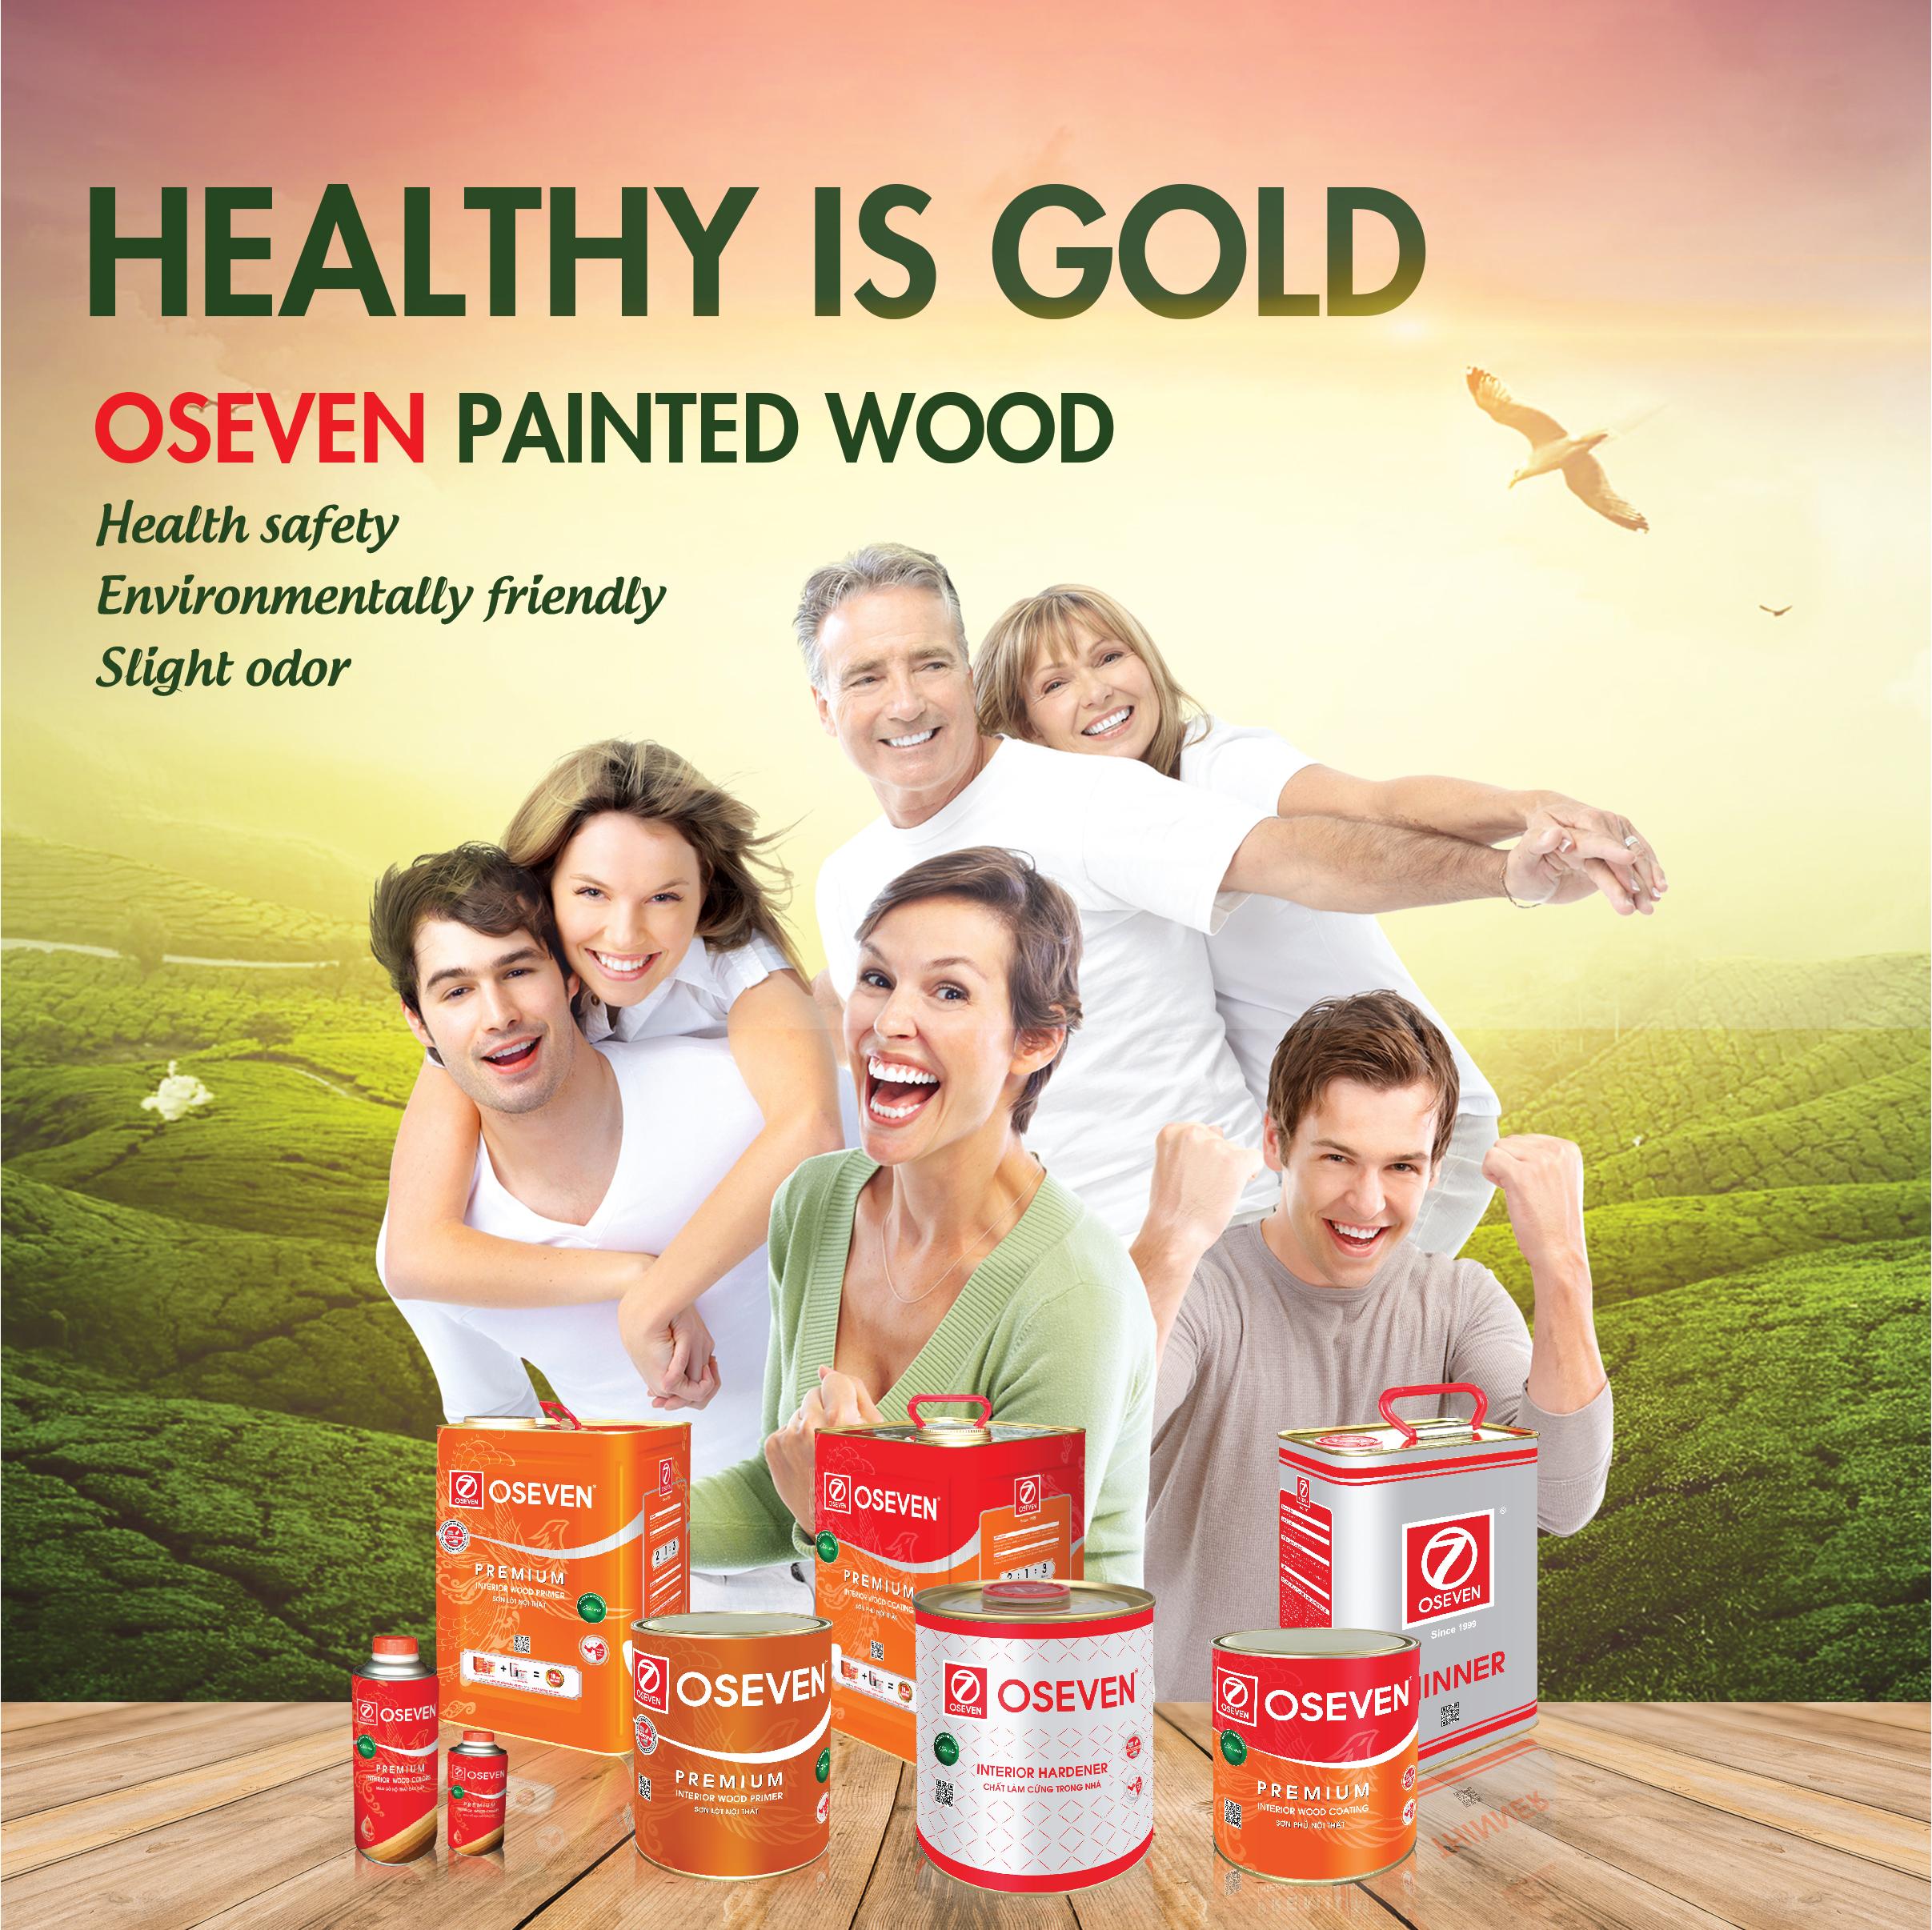 Non-toxic wood paints